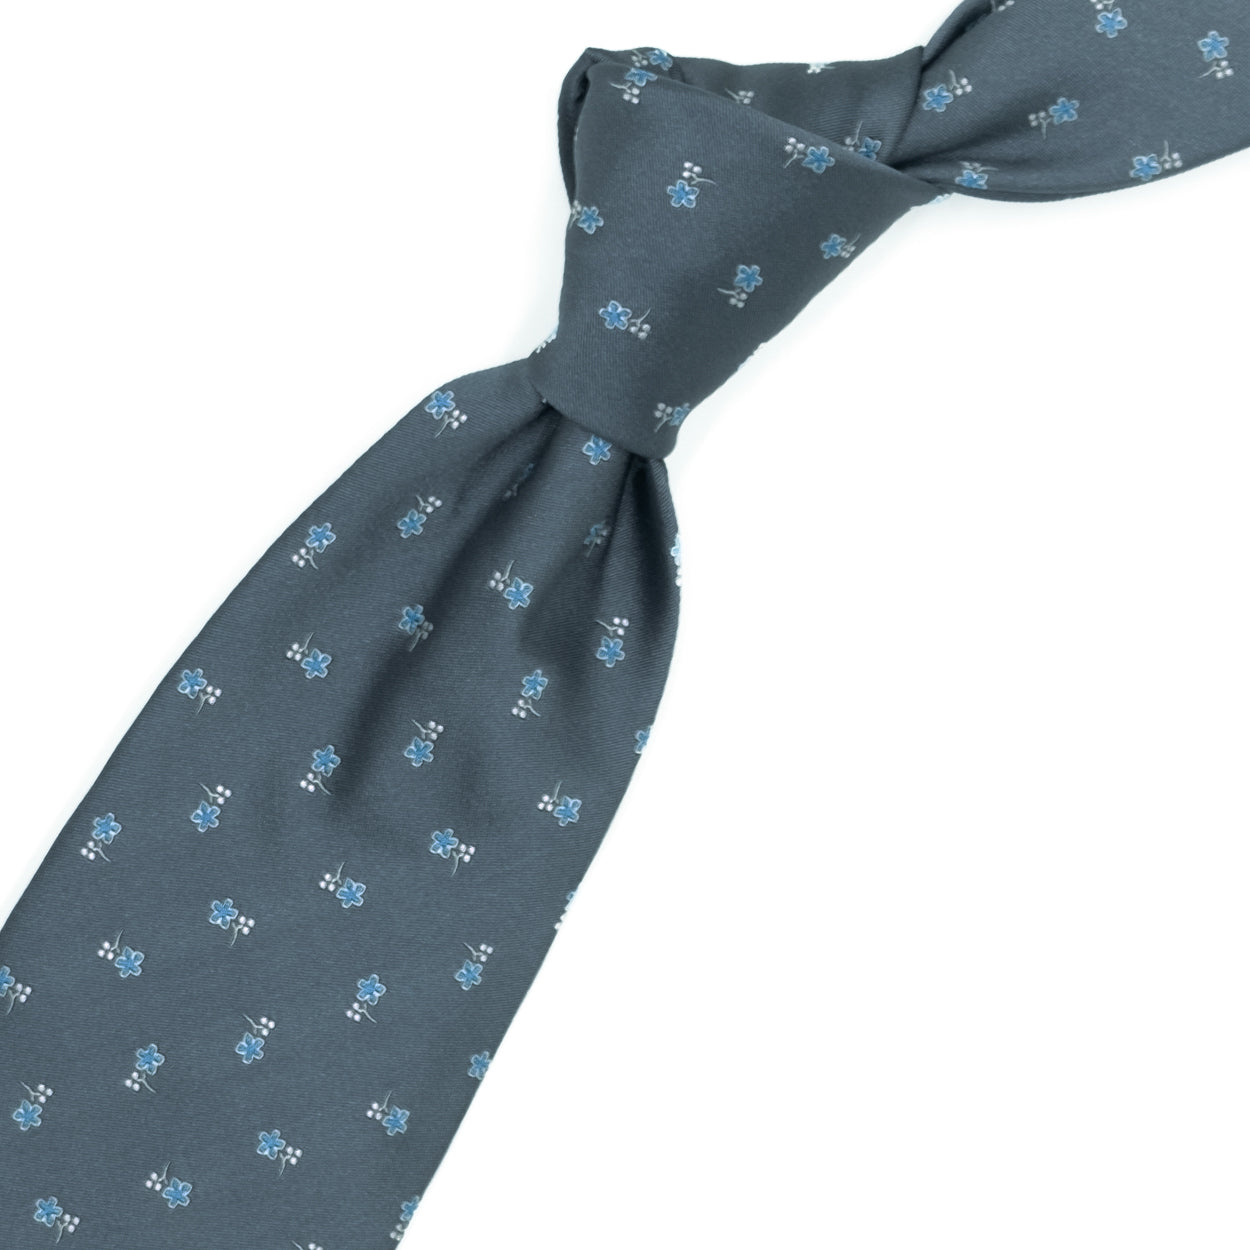 Grey tie with blue flowers